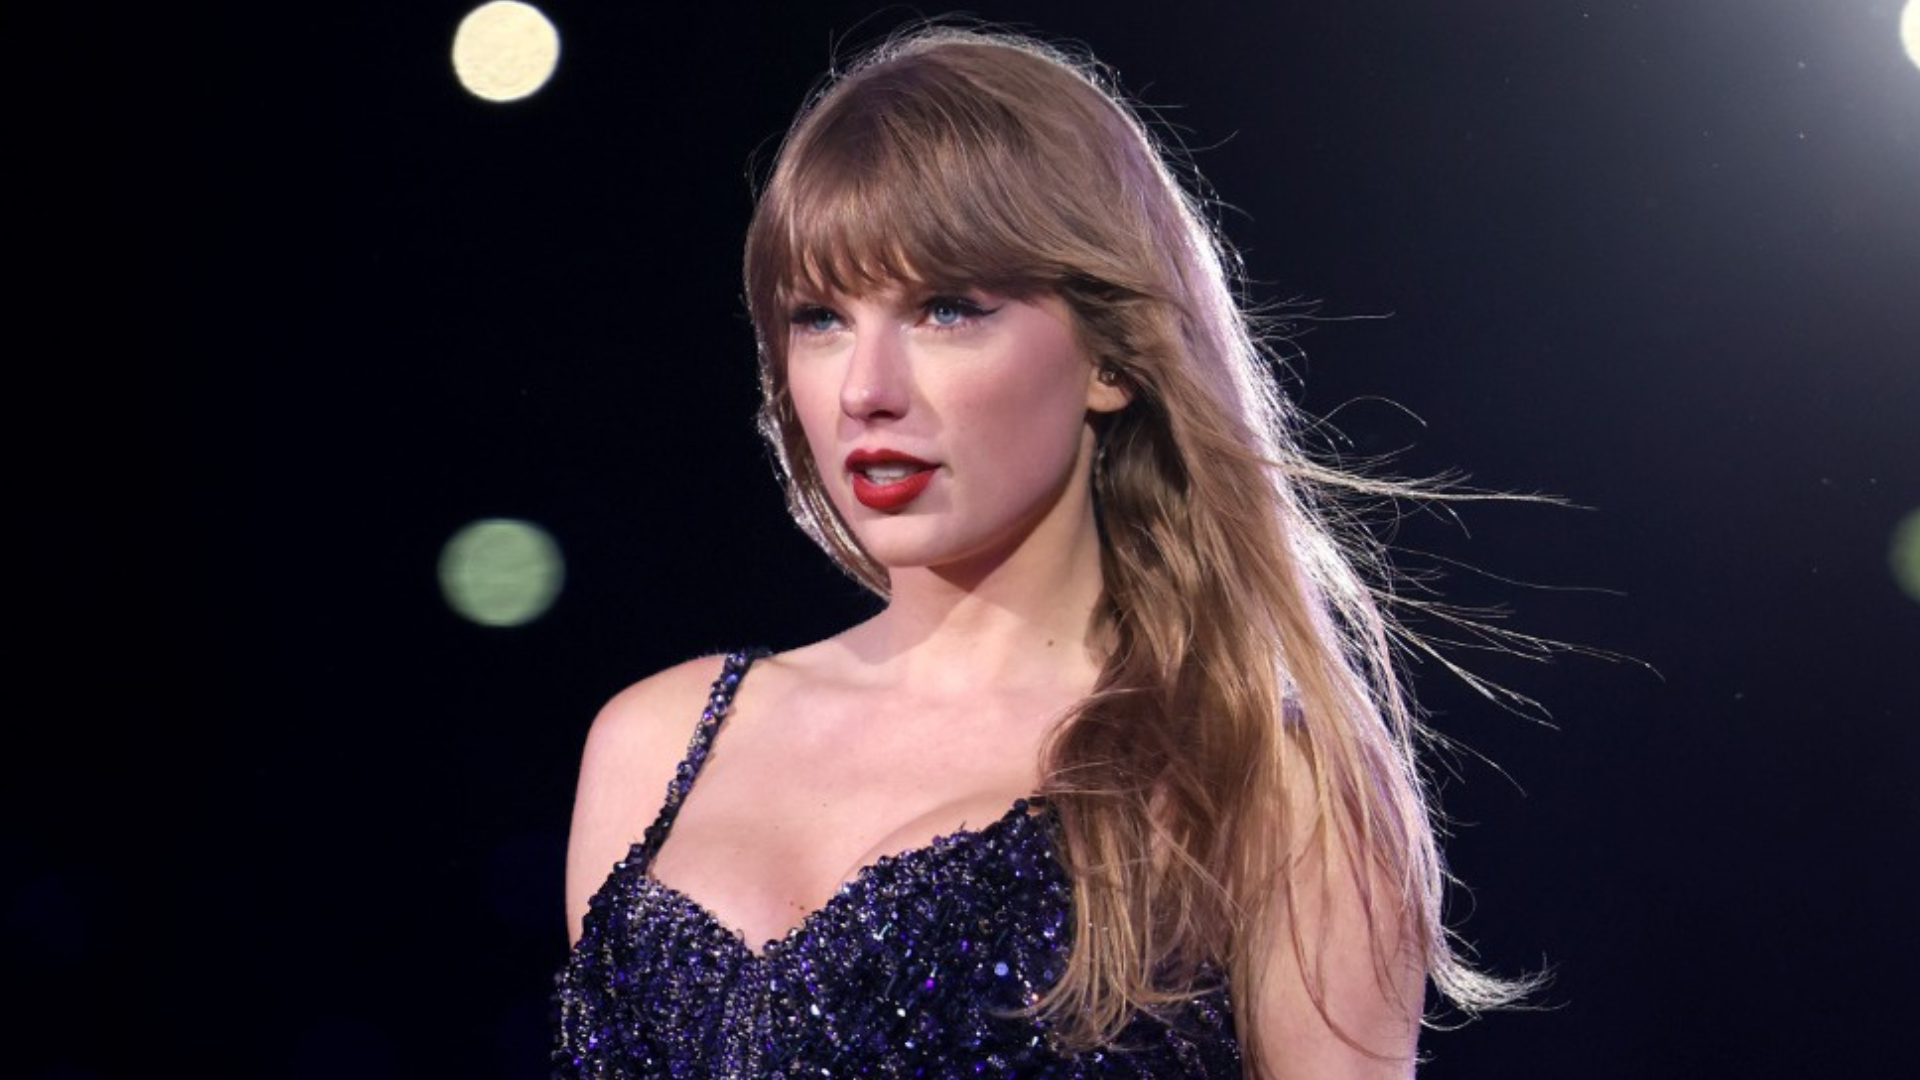 Ex-Integrante do Cansei de Ser Sexy, brasileiro estuda processar Taylor Swift por plágio em hit; ouça as faixas